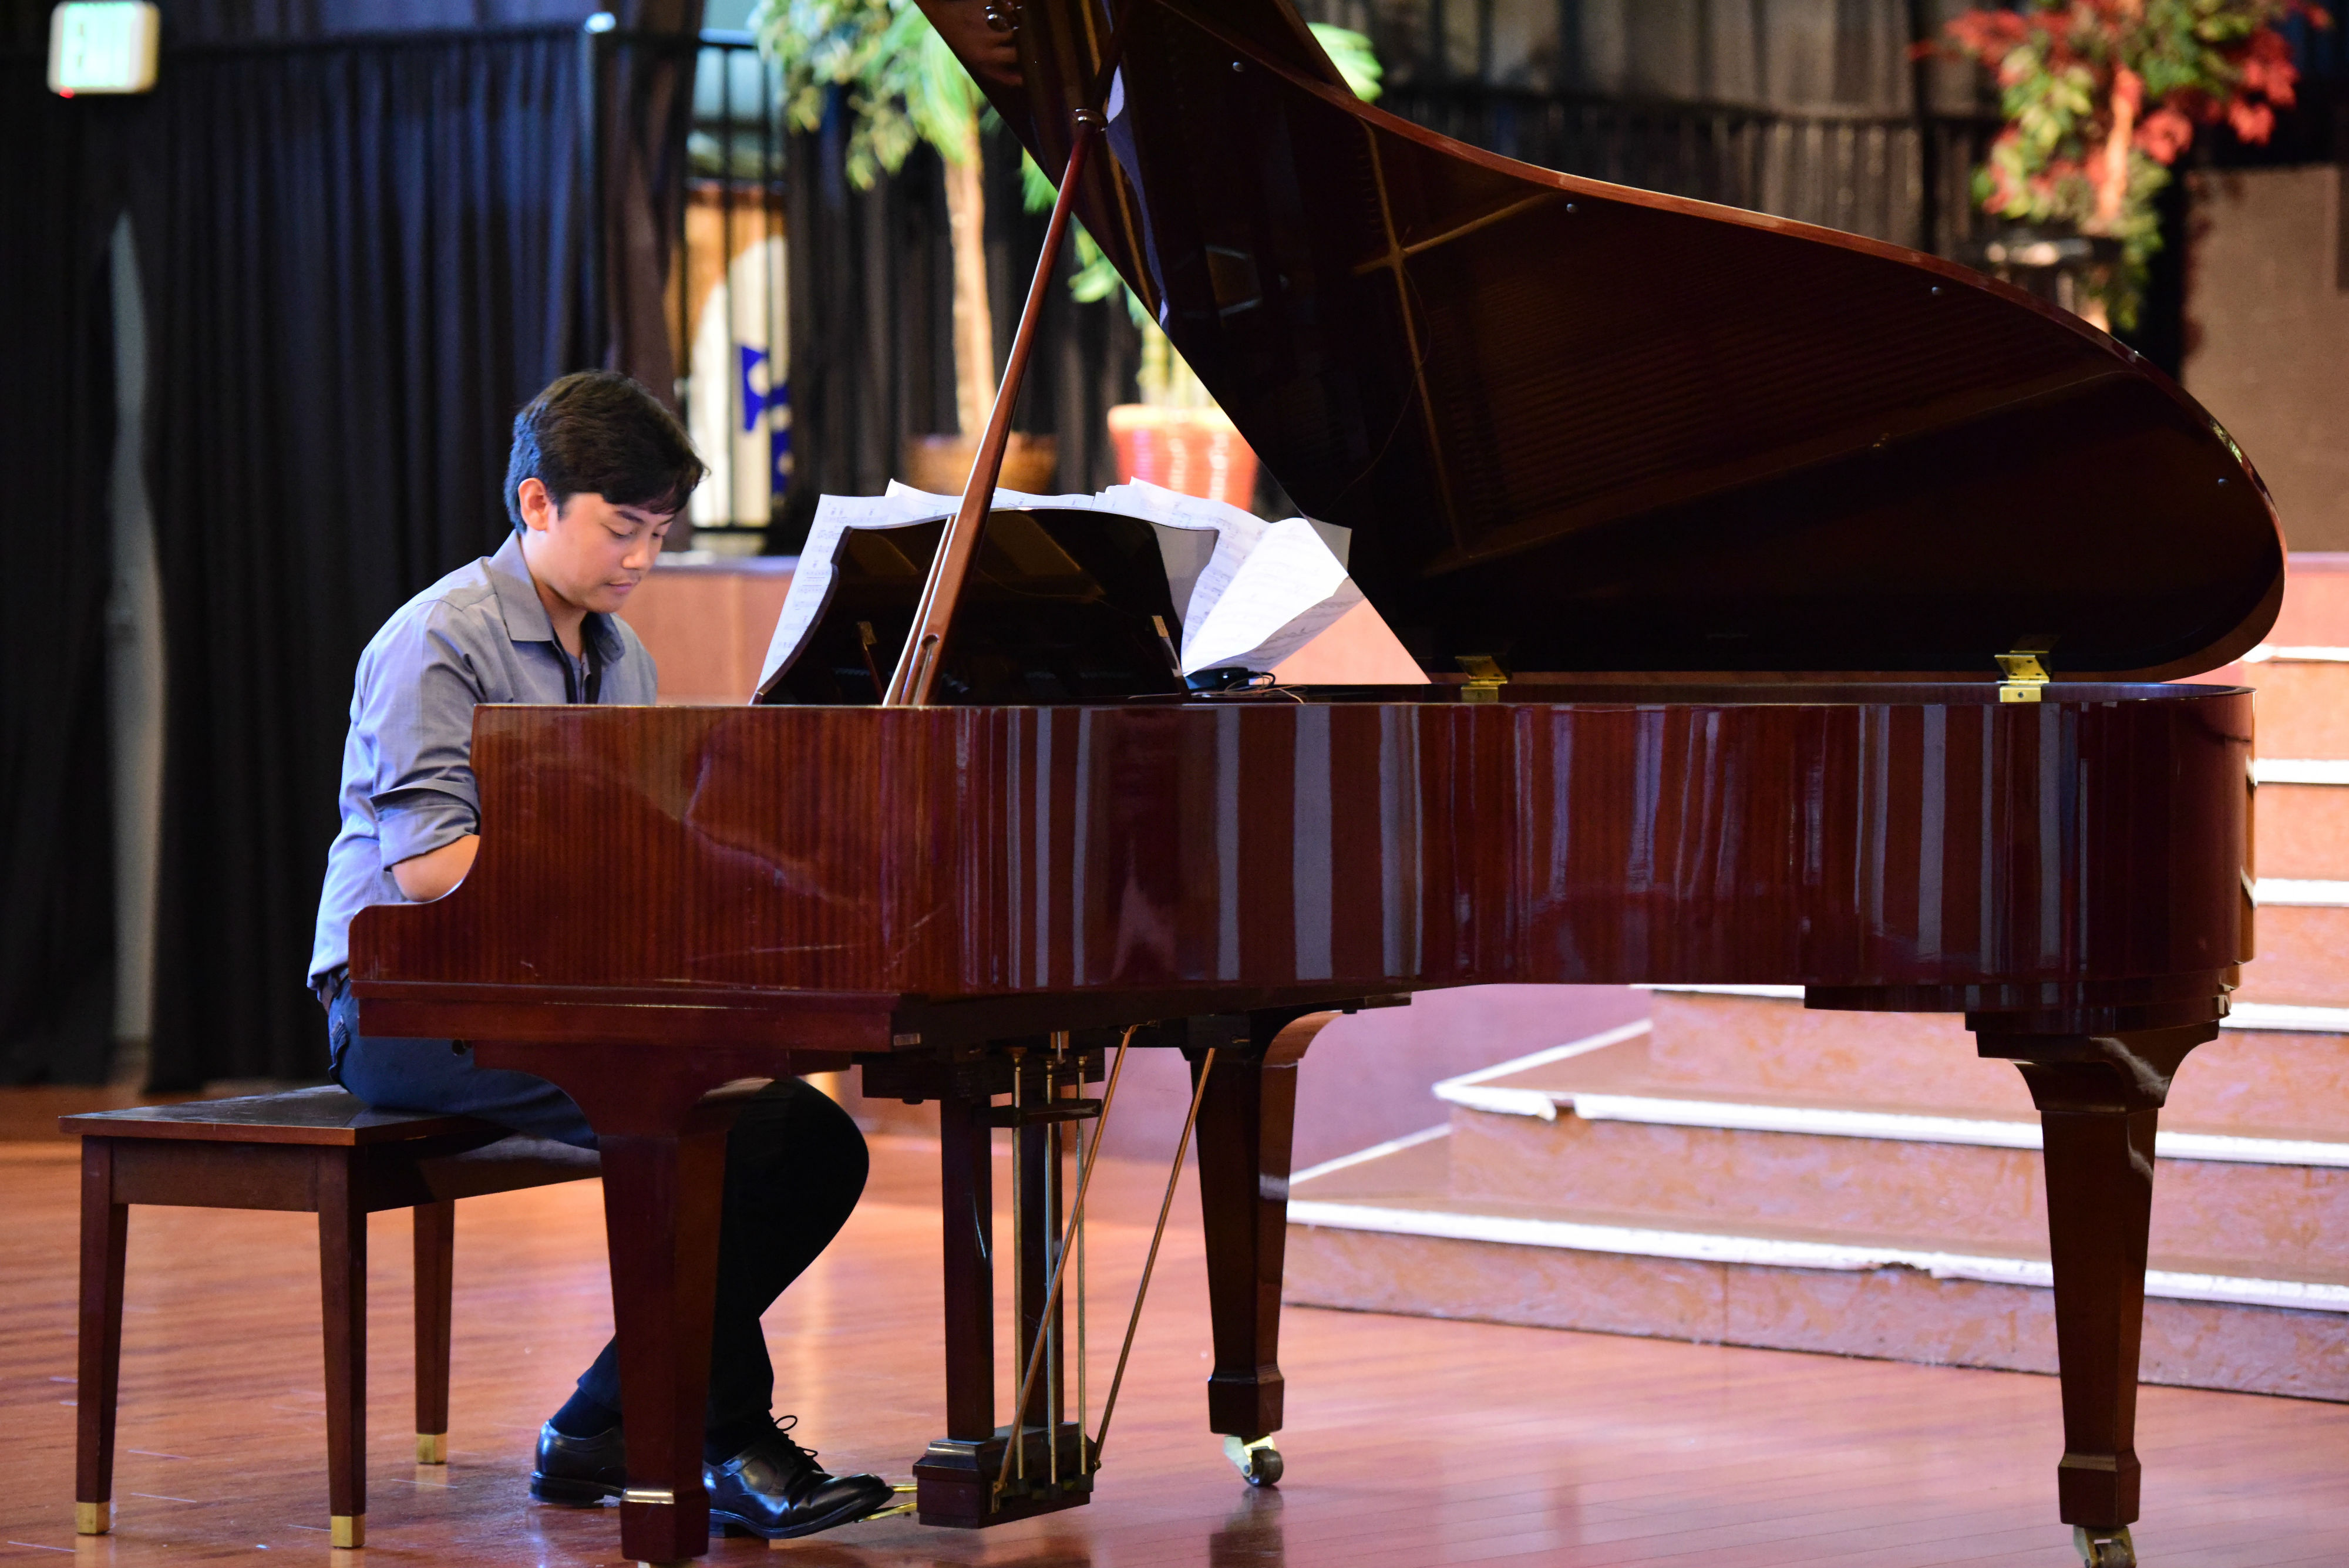 Piano Recital Photo Of Student During Piano Recital